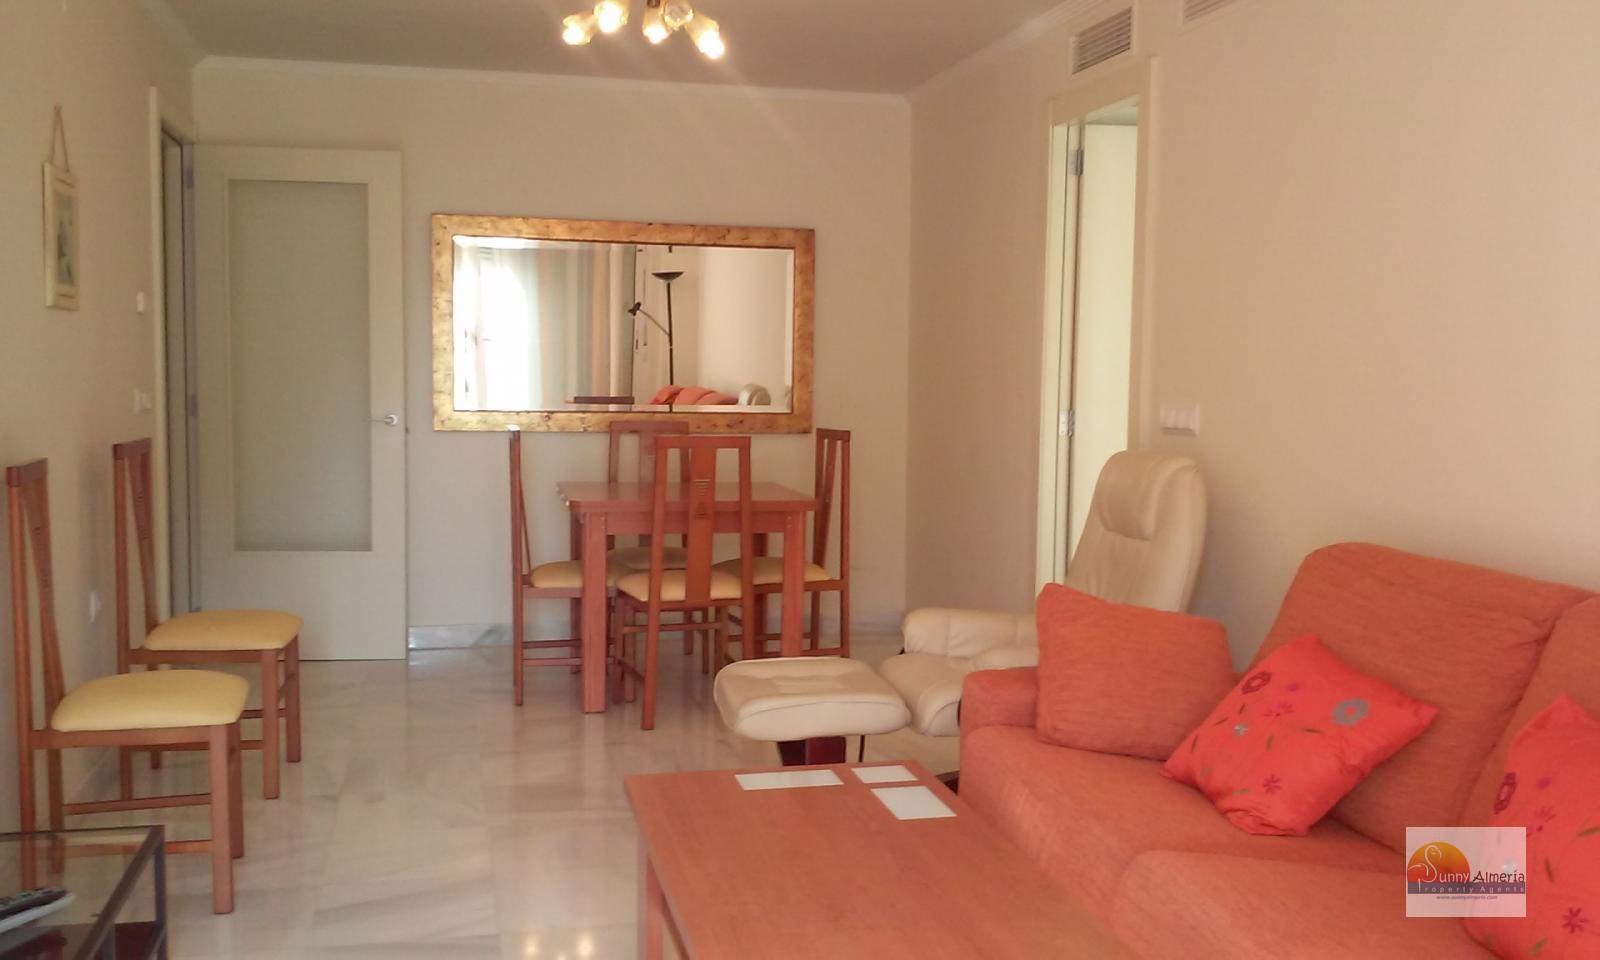 Luxury Apartment for rent in Carretera Ciudad de Cadiz 1A (Roquetas de Mar), 950 €/month